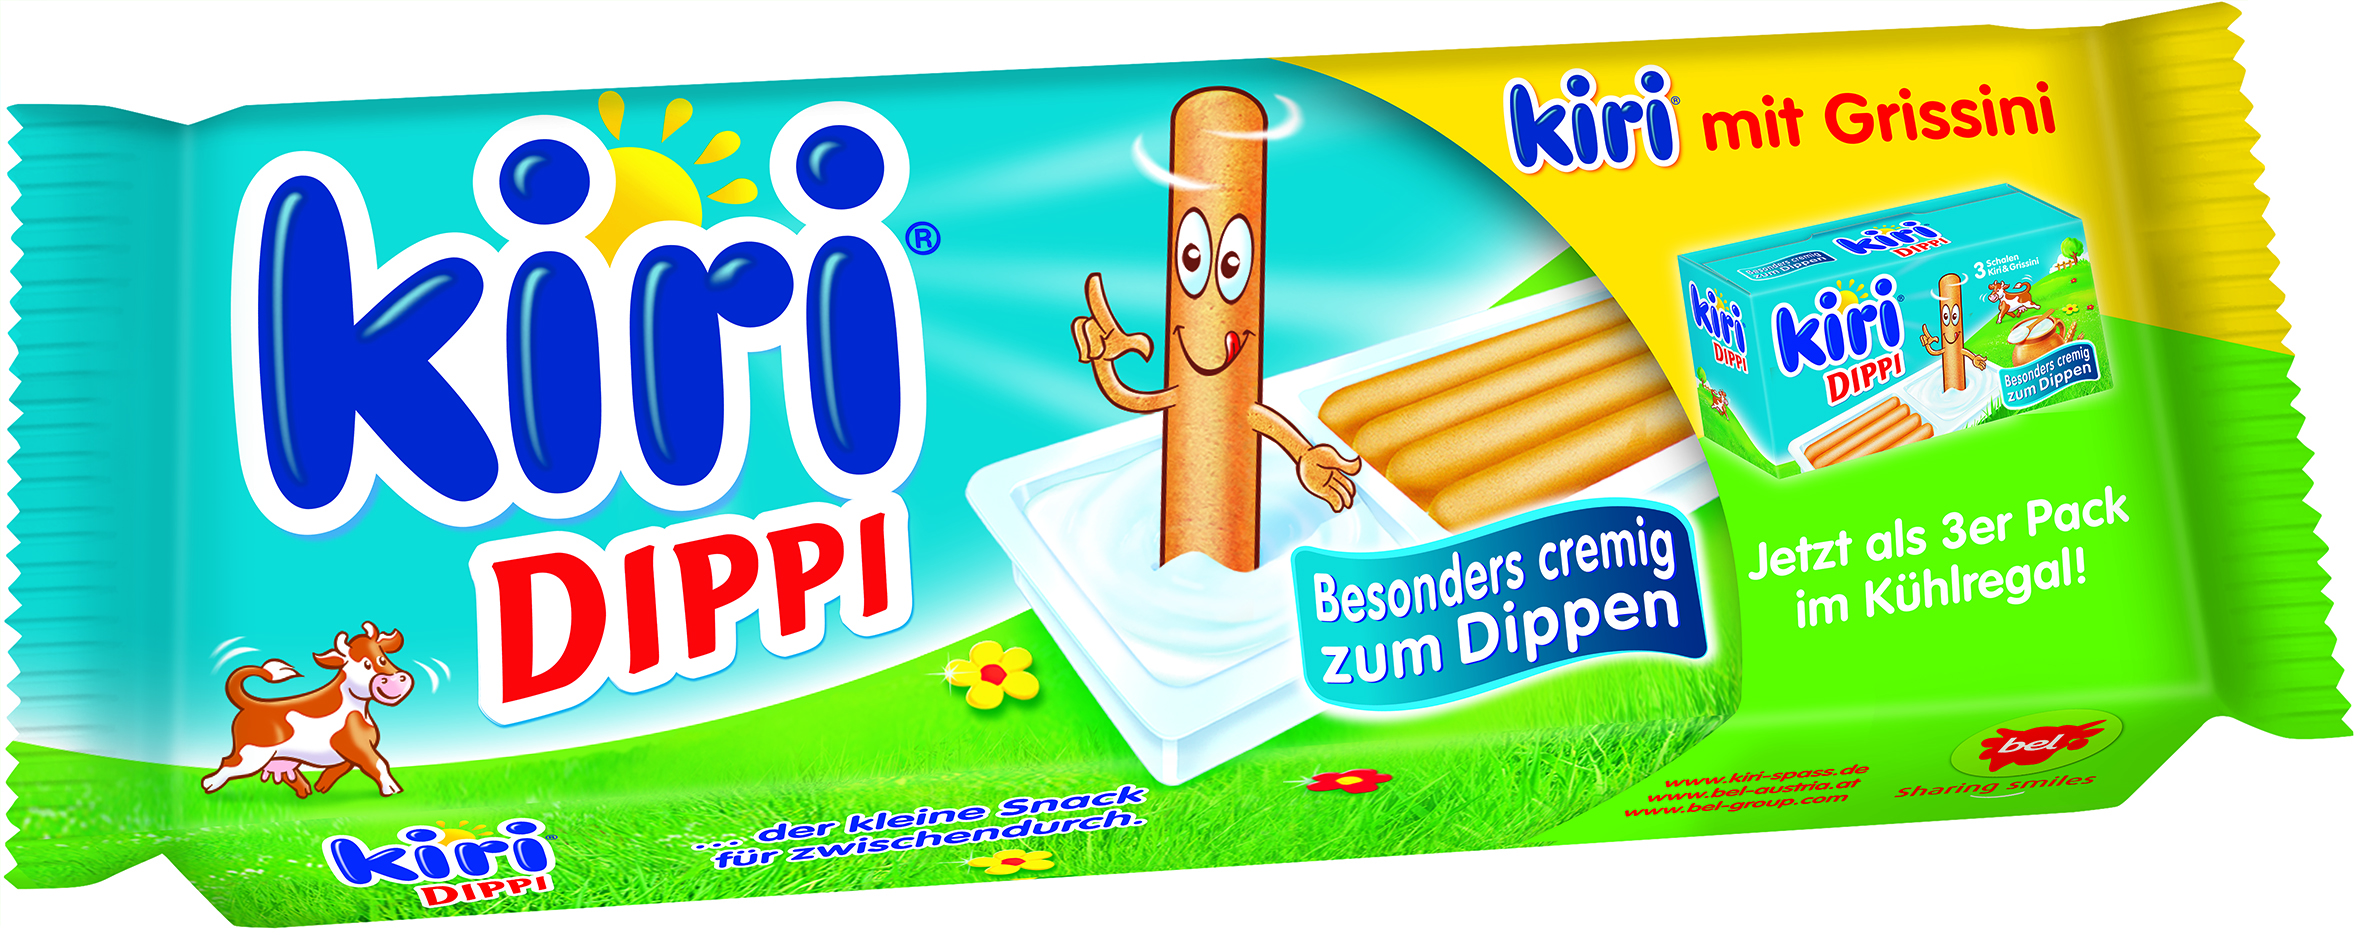 Kiri® Dippi Cheese with Breadsticks 35g - Bel Food Service